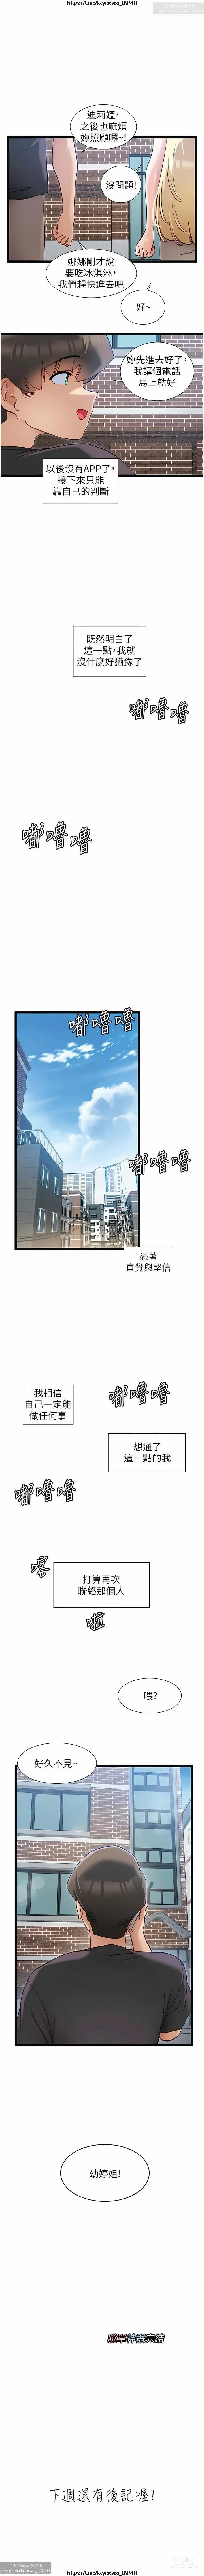 Page 275 of manga 脱单神器 28-55 完结